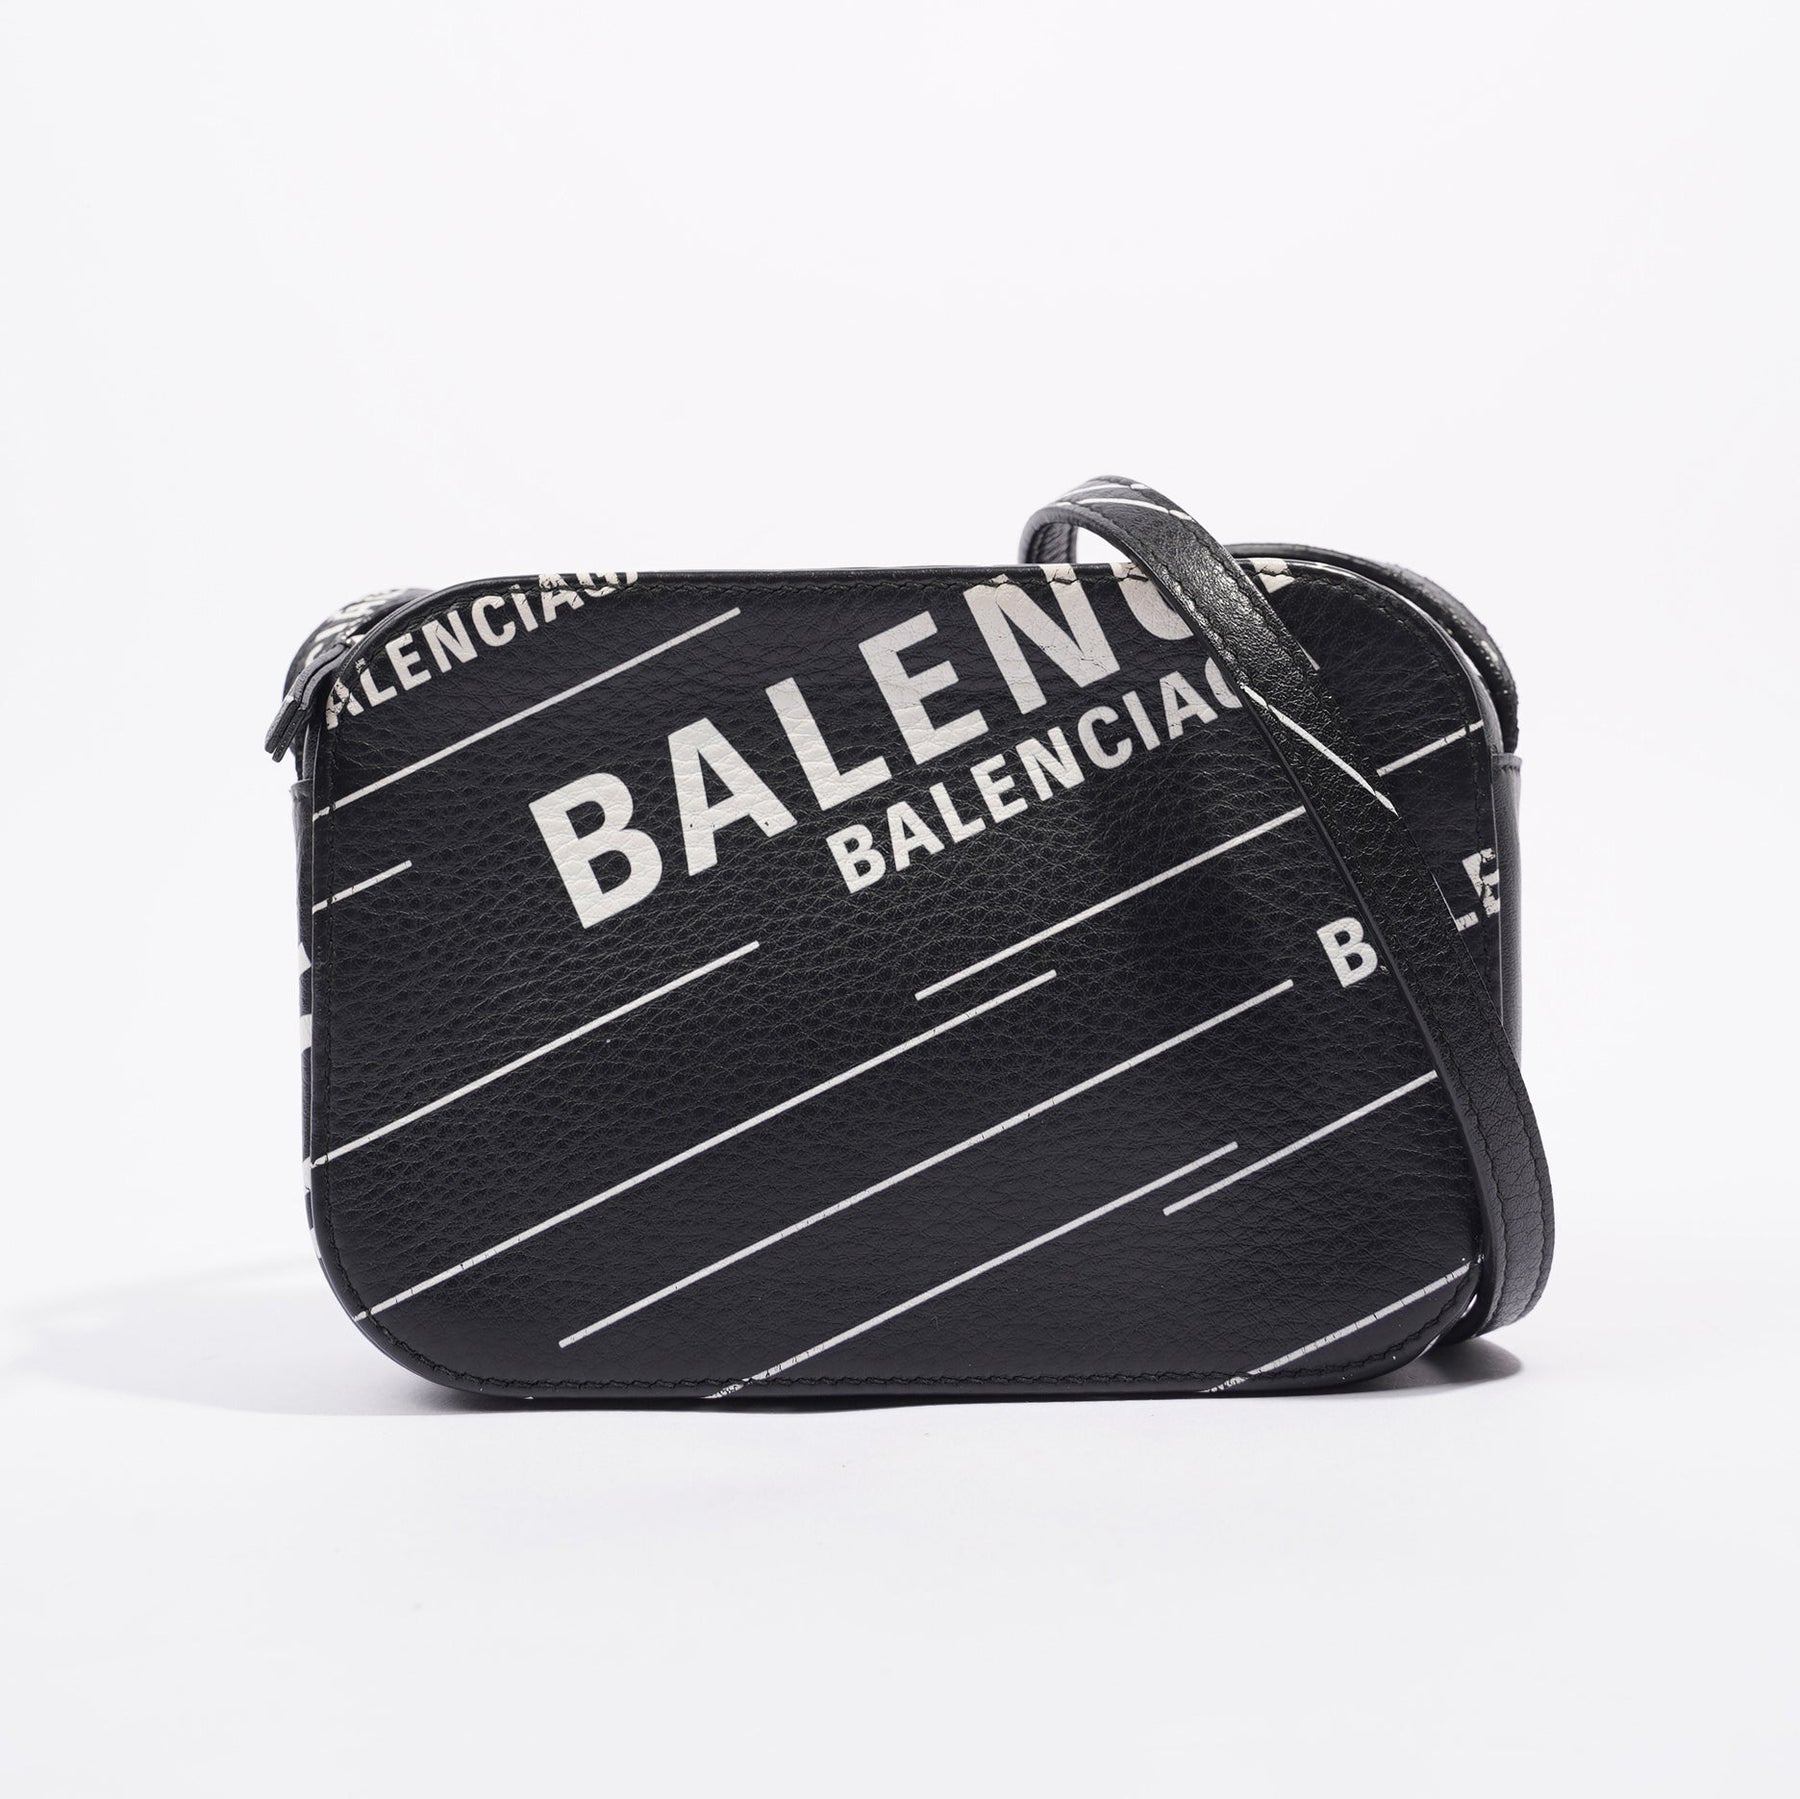 Balenciaga Women's Everyday Small Camera Bag - Black White